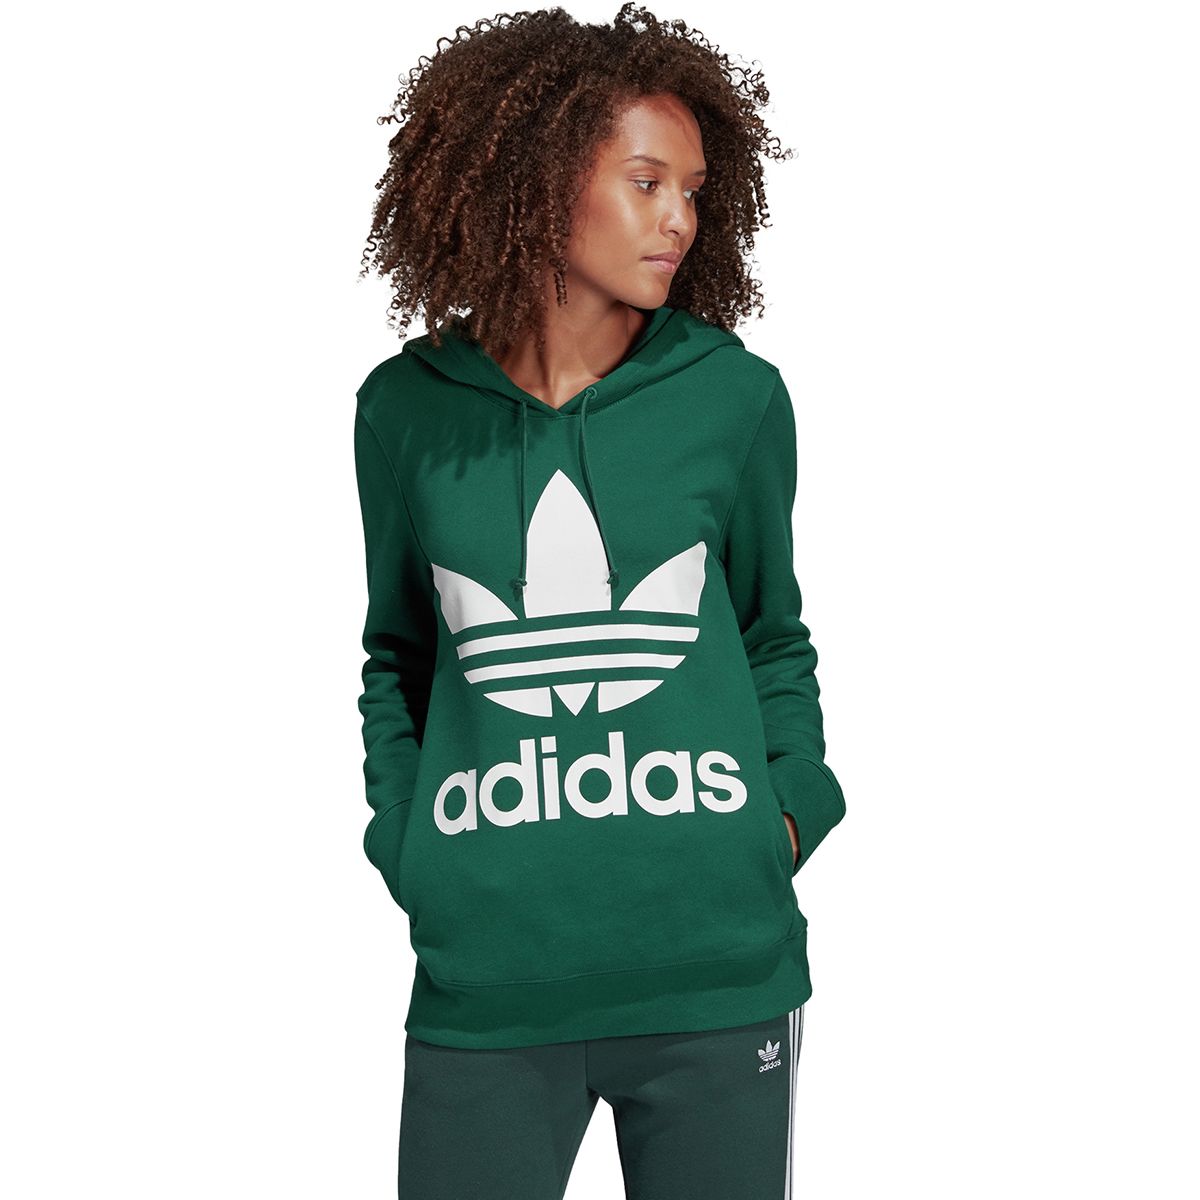 adidas green hoodie women's